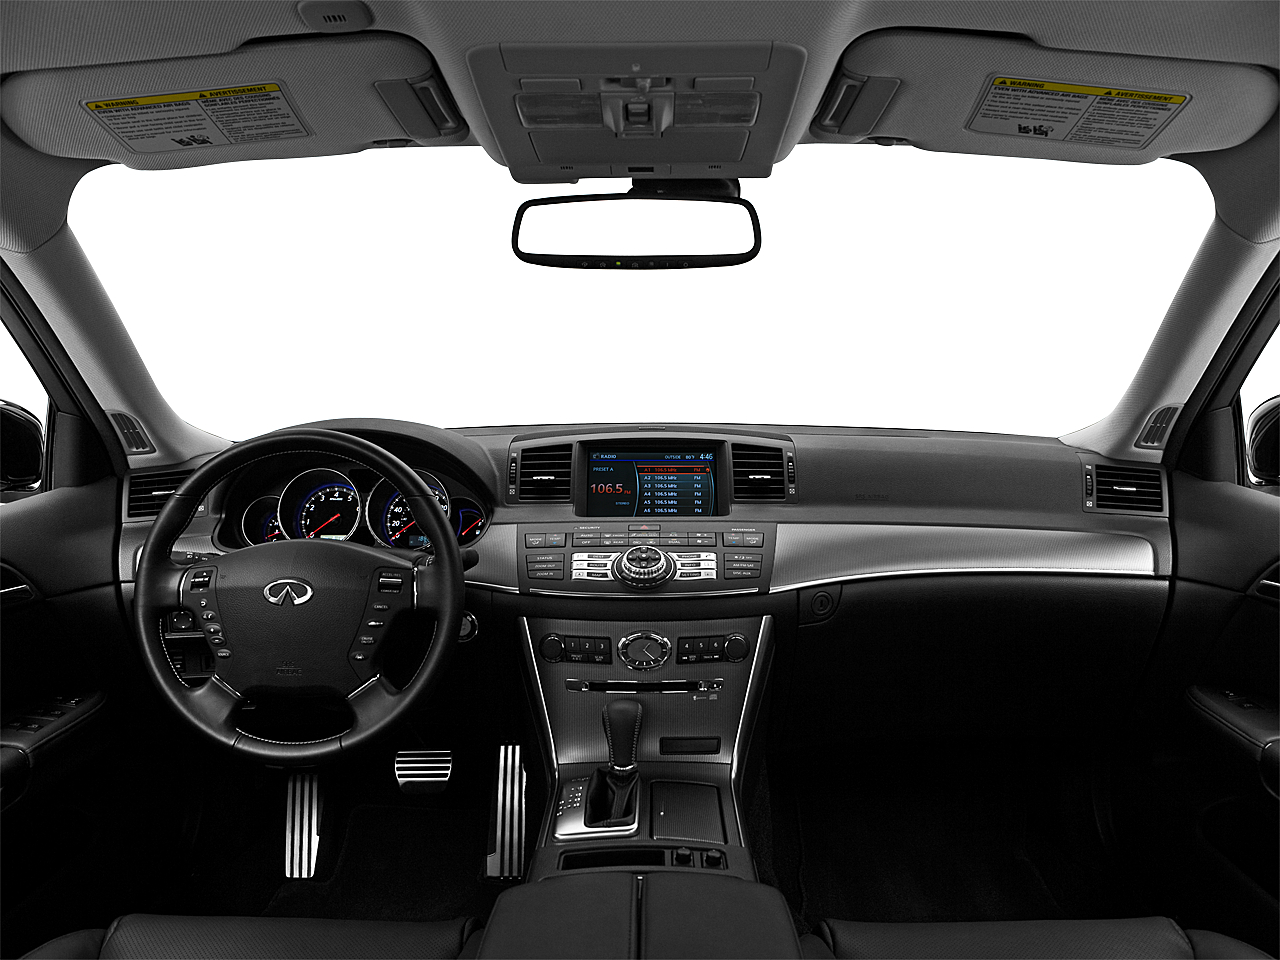 2010 INFINITI M45 AWD x 4dr Sedan - Research - GrooveCar